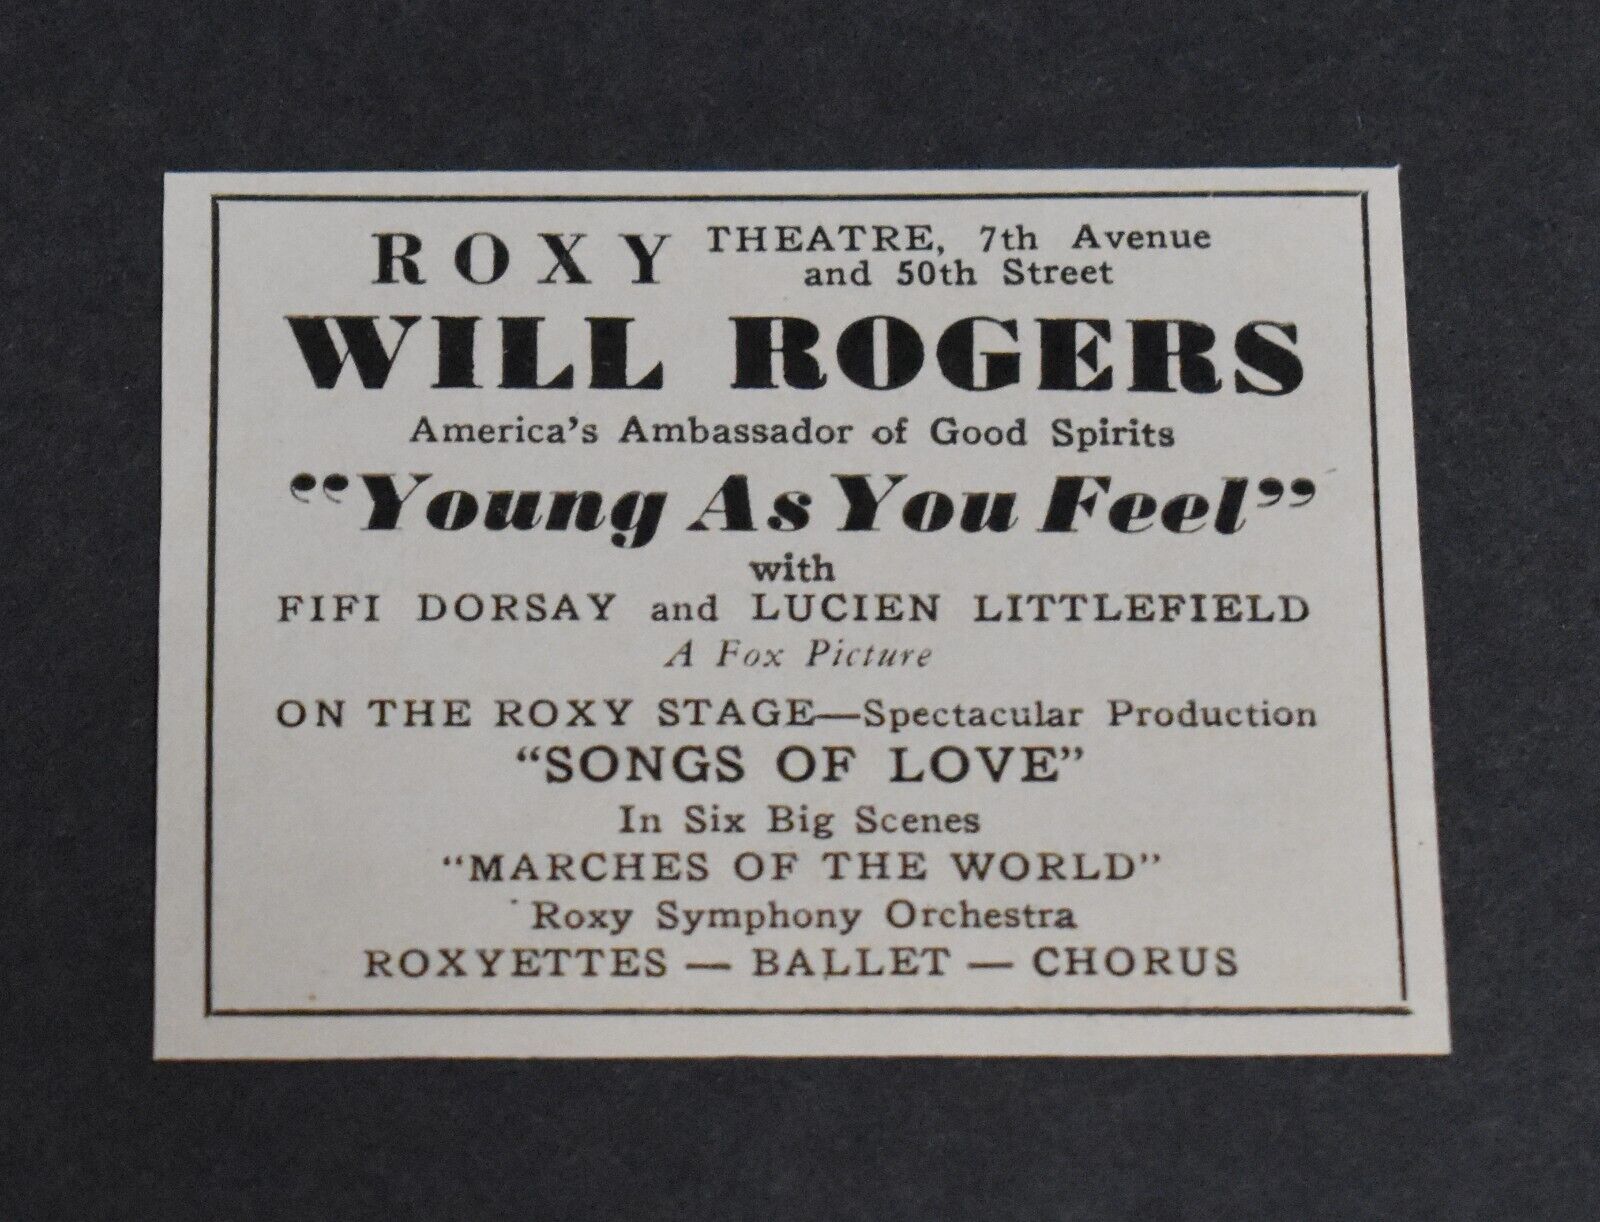 1931 Print Ad New York Roxy Theatre Will Rogers Fifi Dorsay Lucien Littlefield